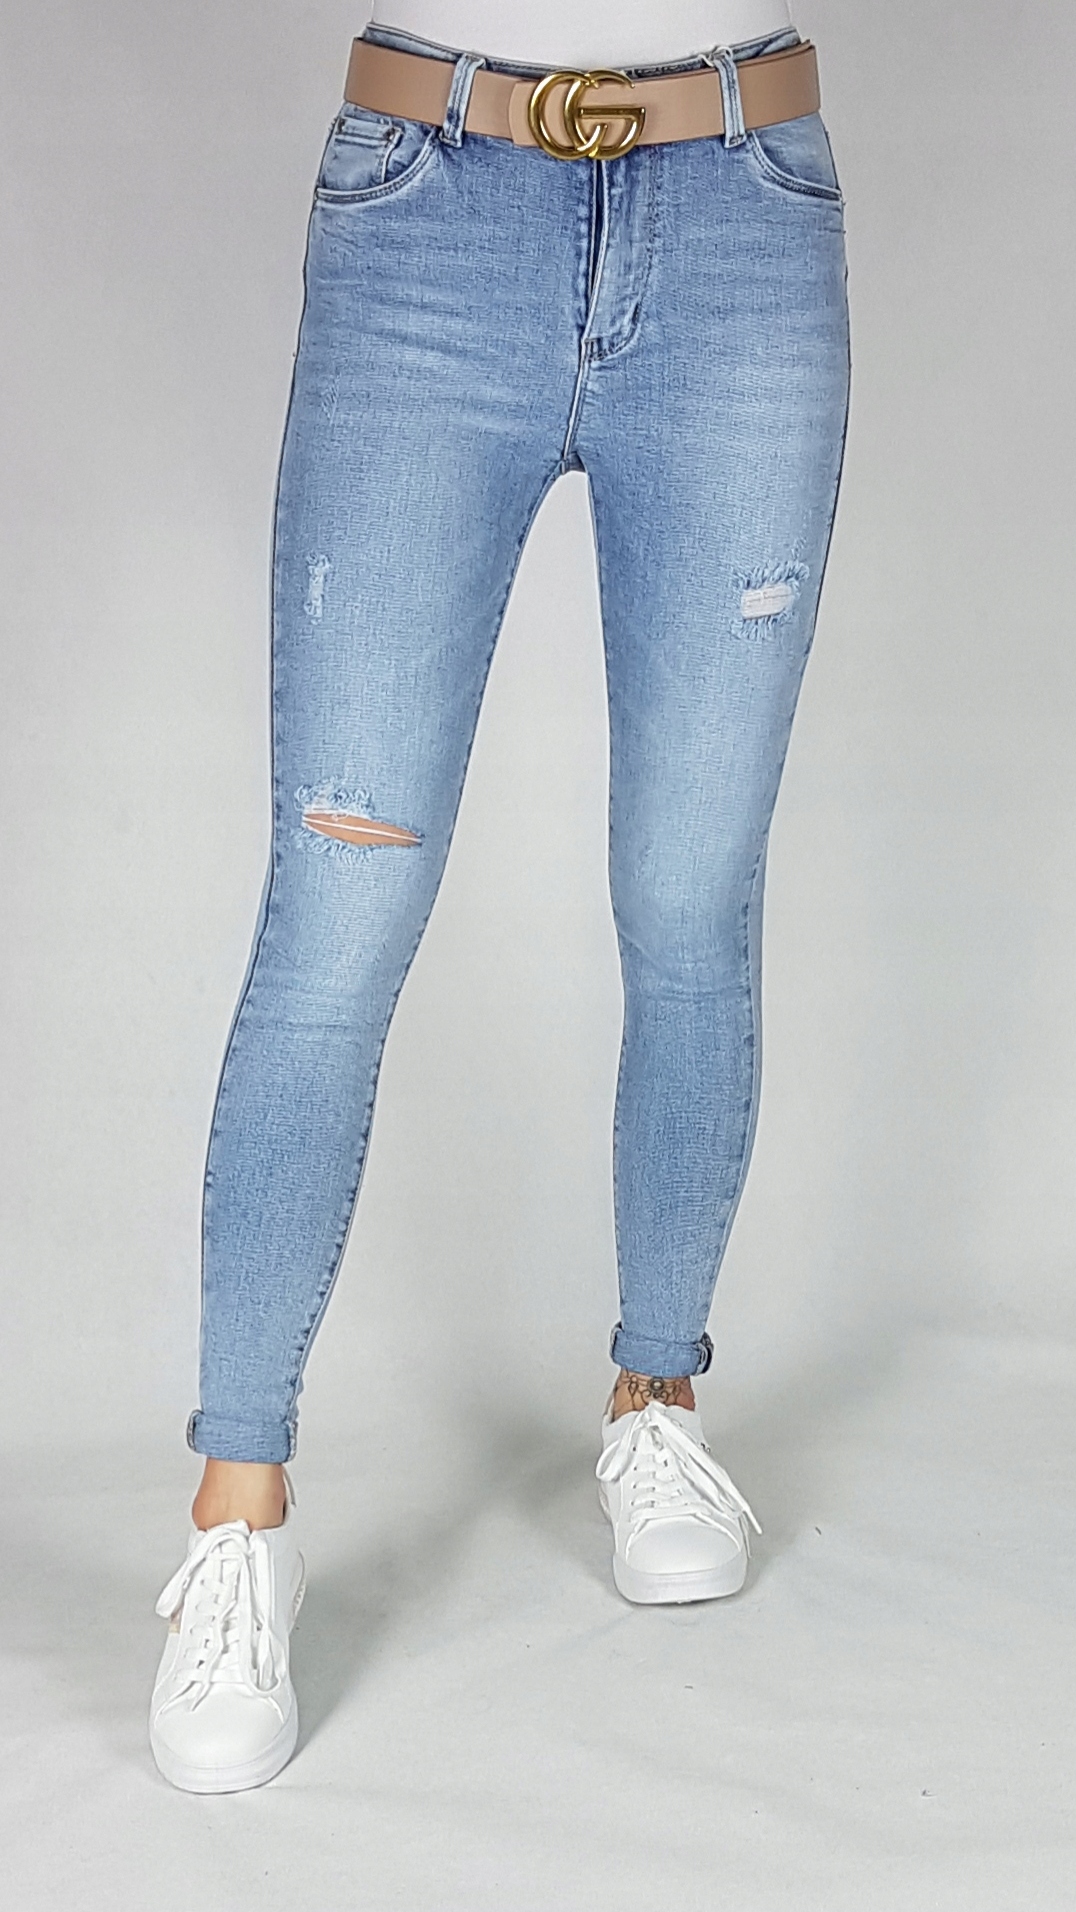 M. SARA джинсовые брюки с отверстиями размер S Midsection (Waist Height) high